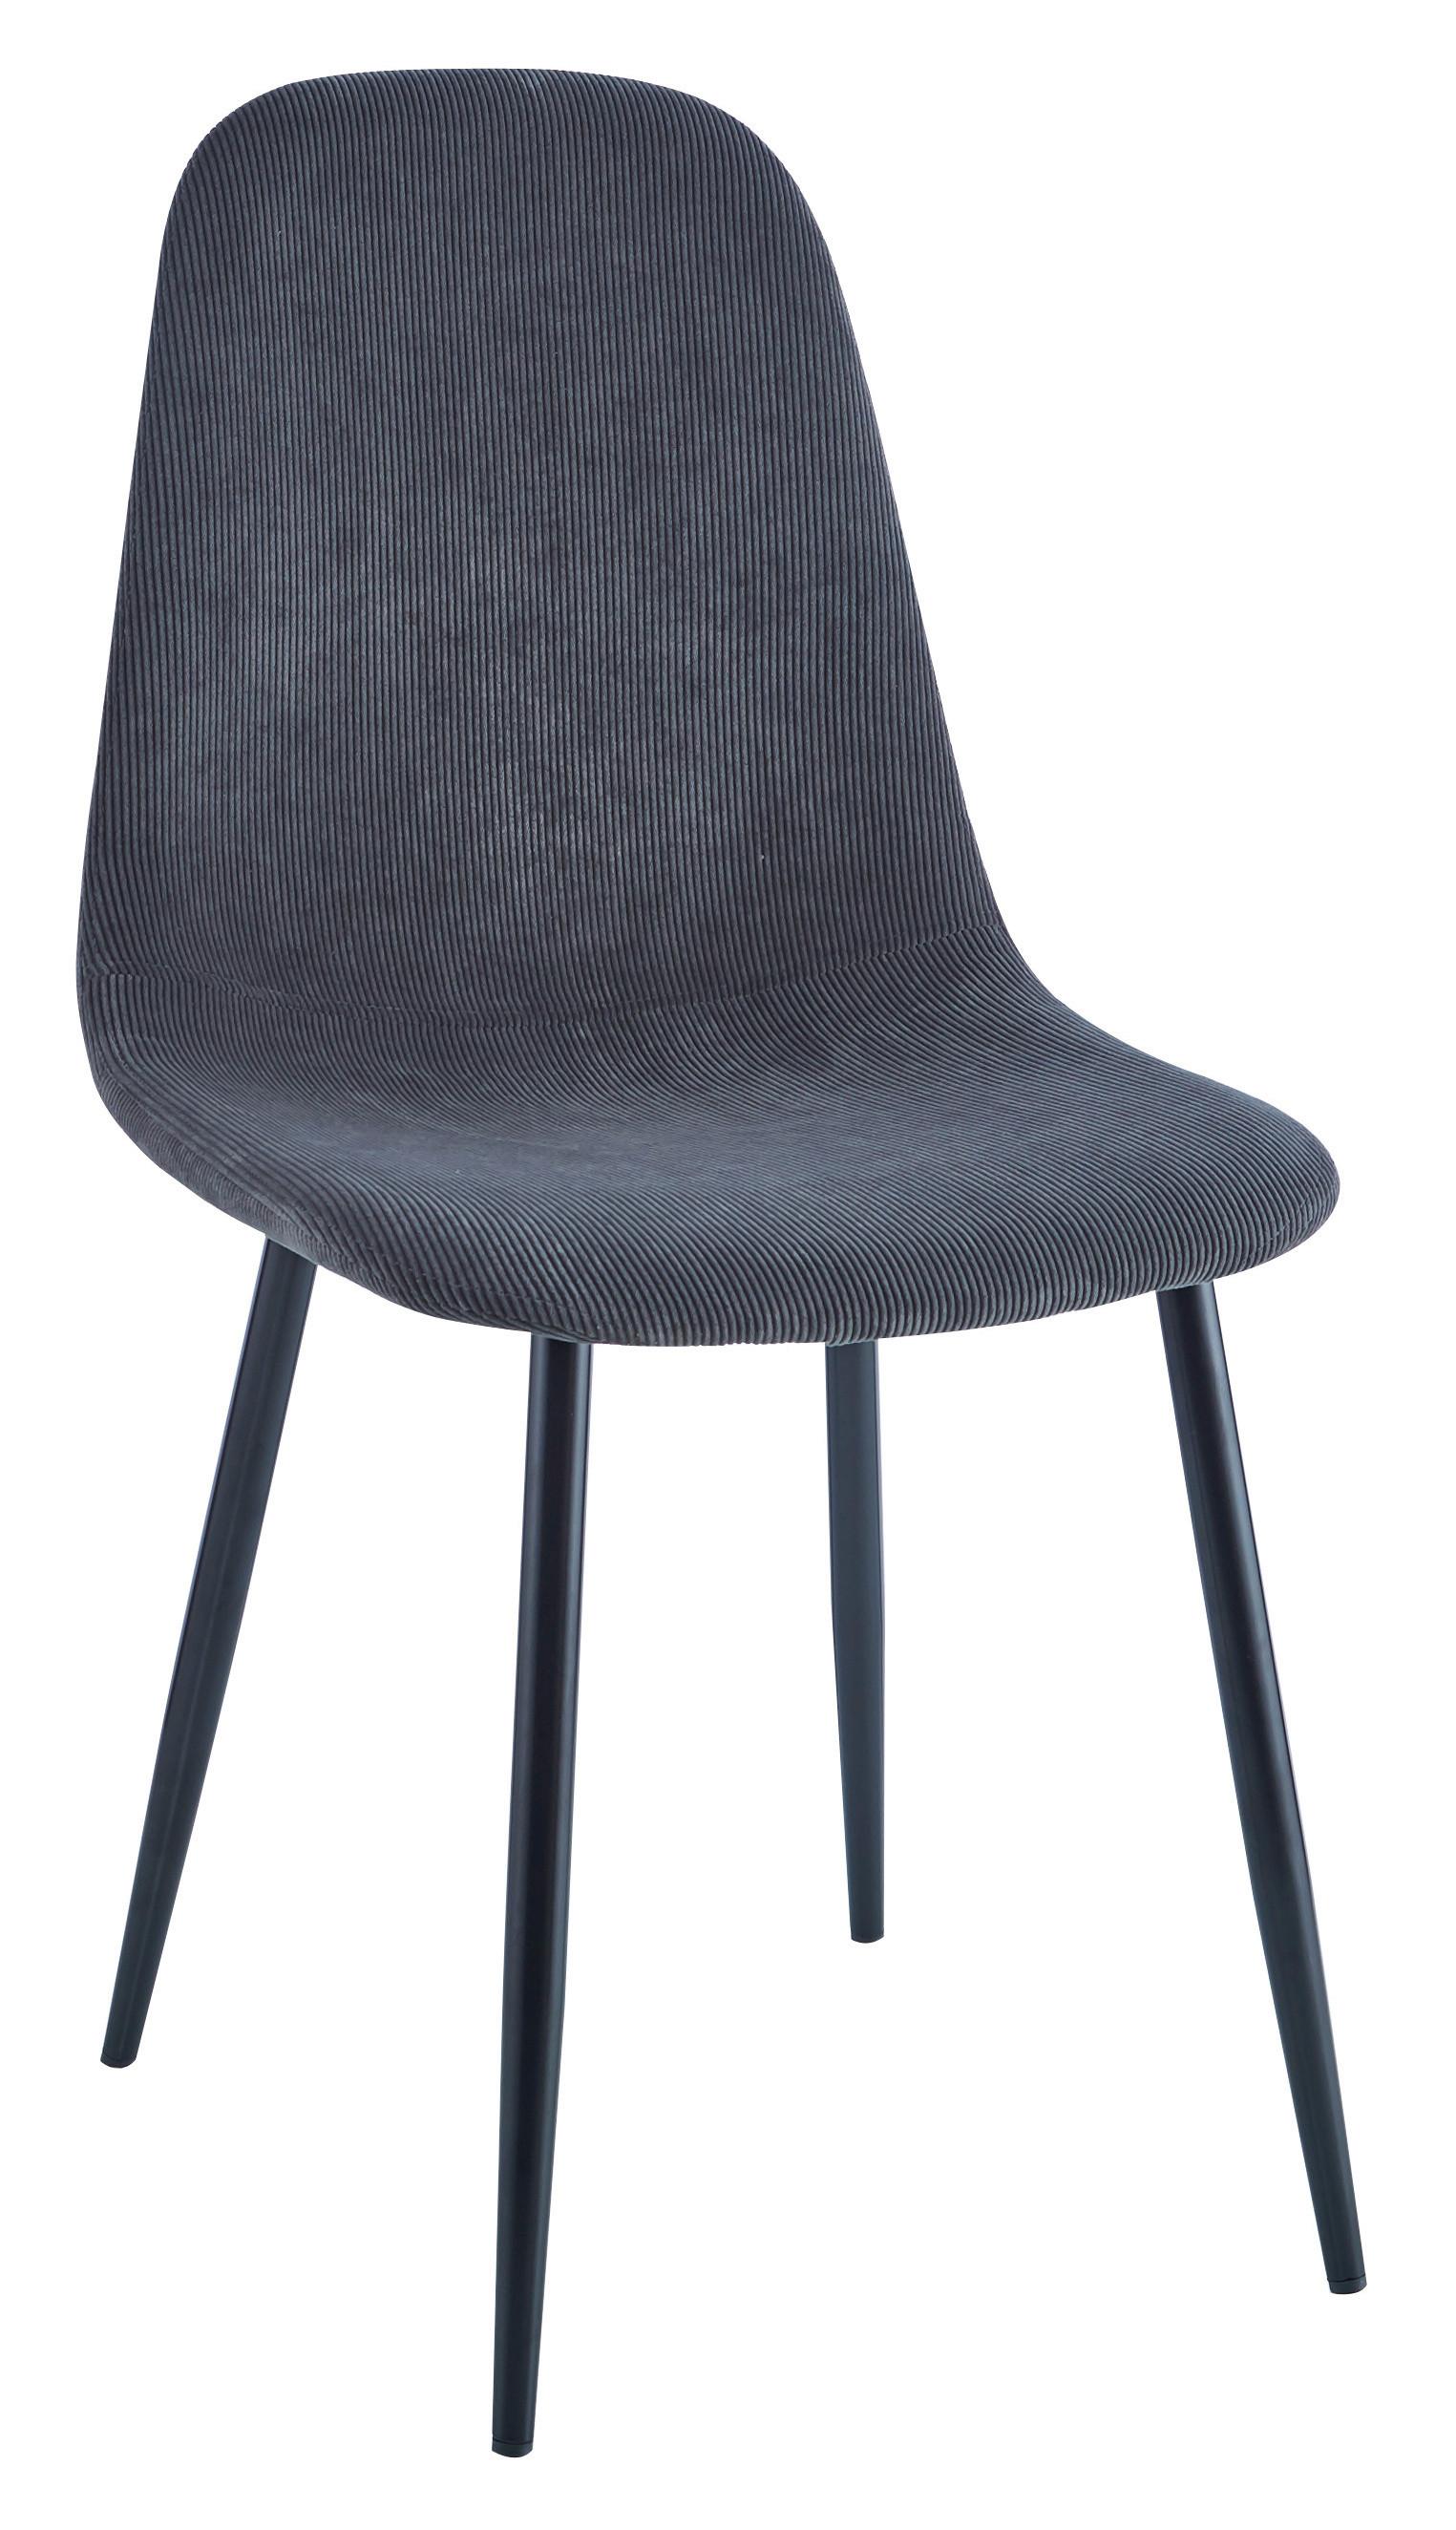 Židle Cordula - šedá/černá, Moderní, kov/textil (44,5/86,5/54cm) - Modern Living